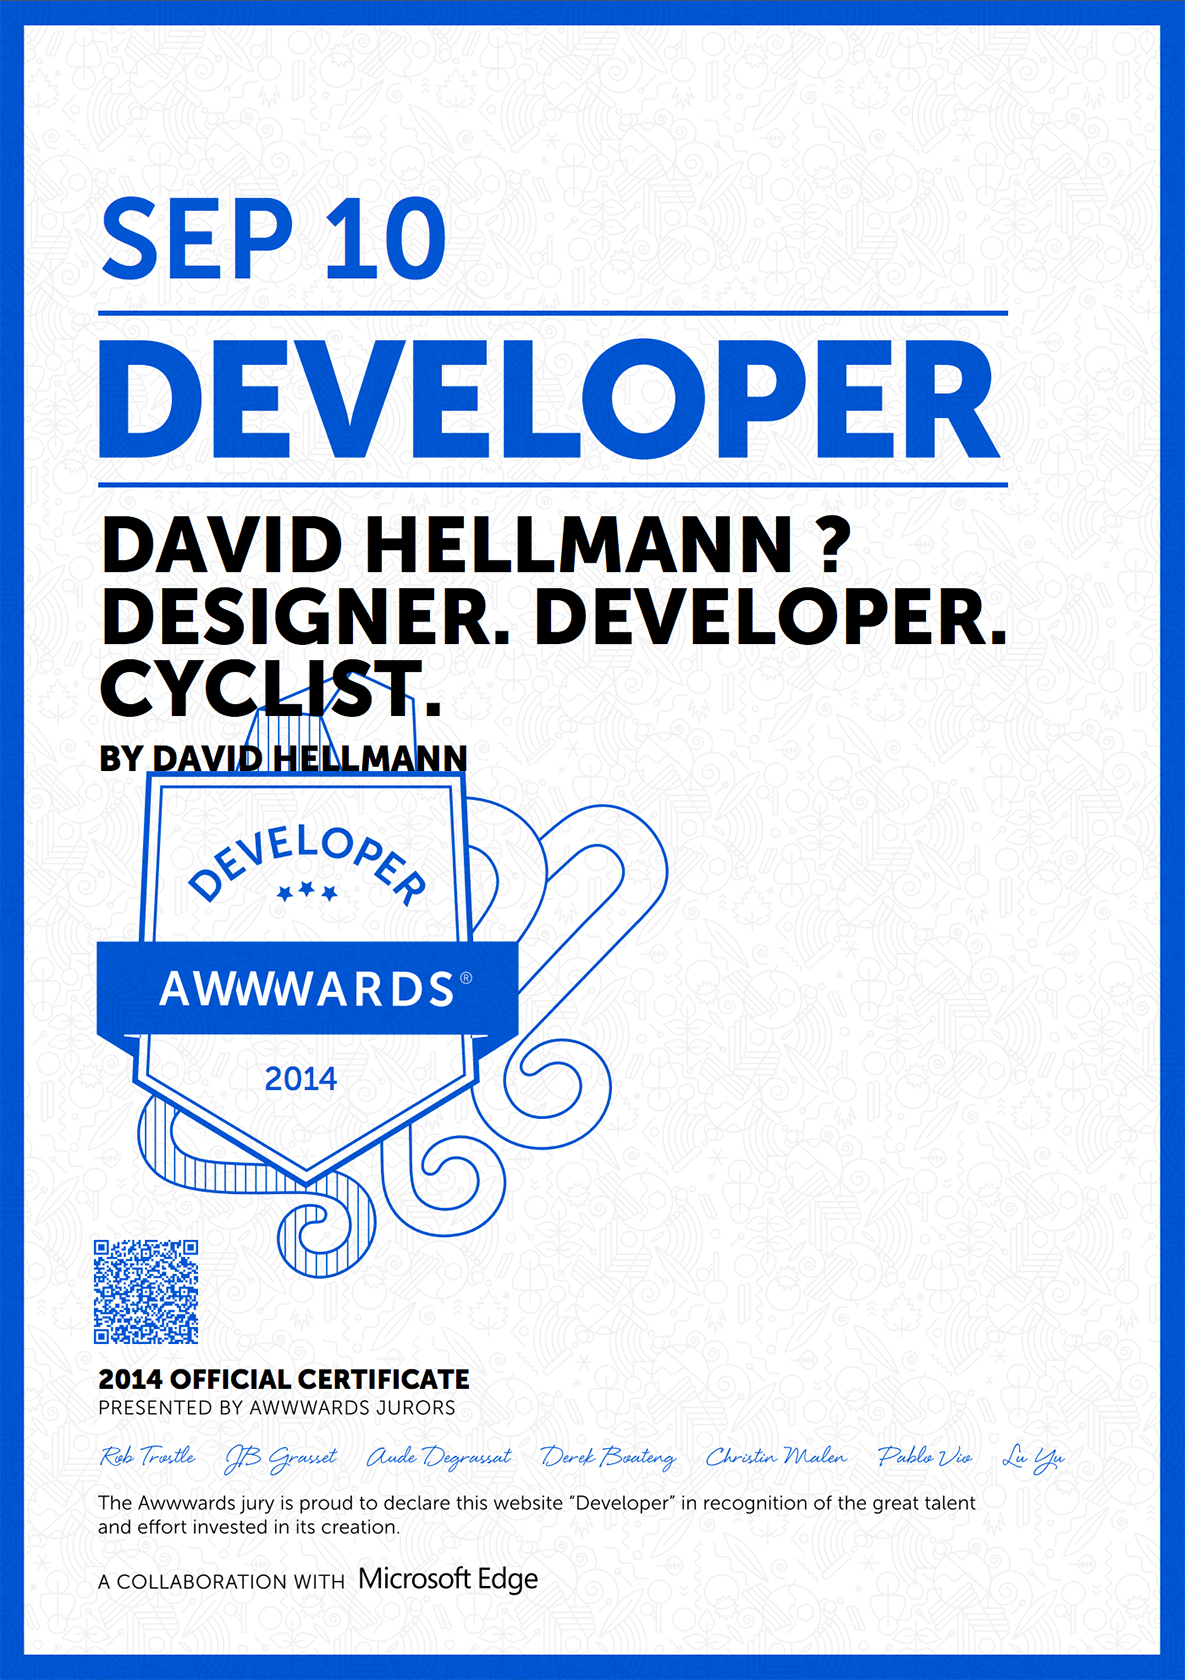 Awwwards Developer Award 2014 09 10